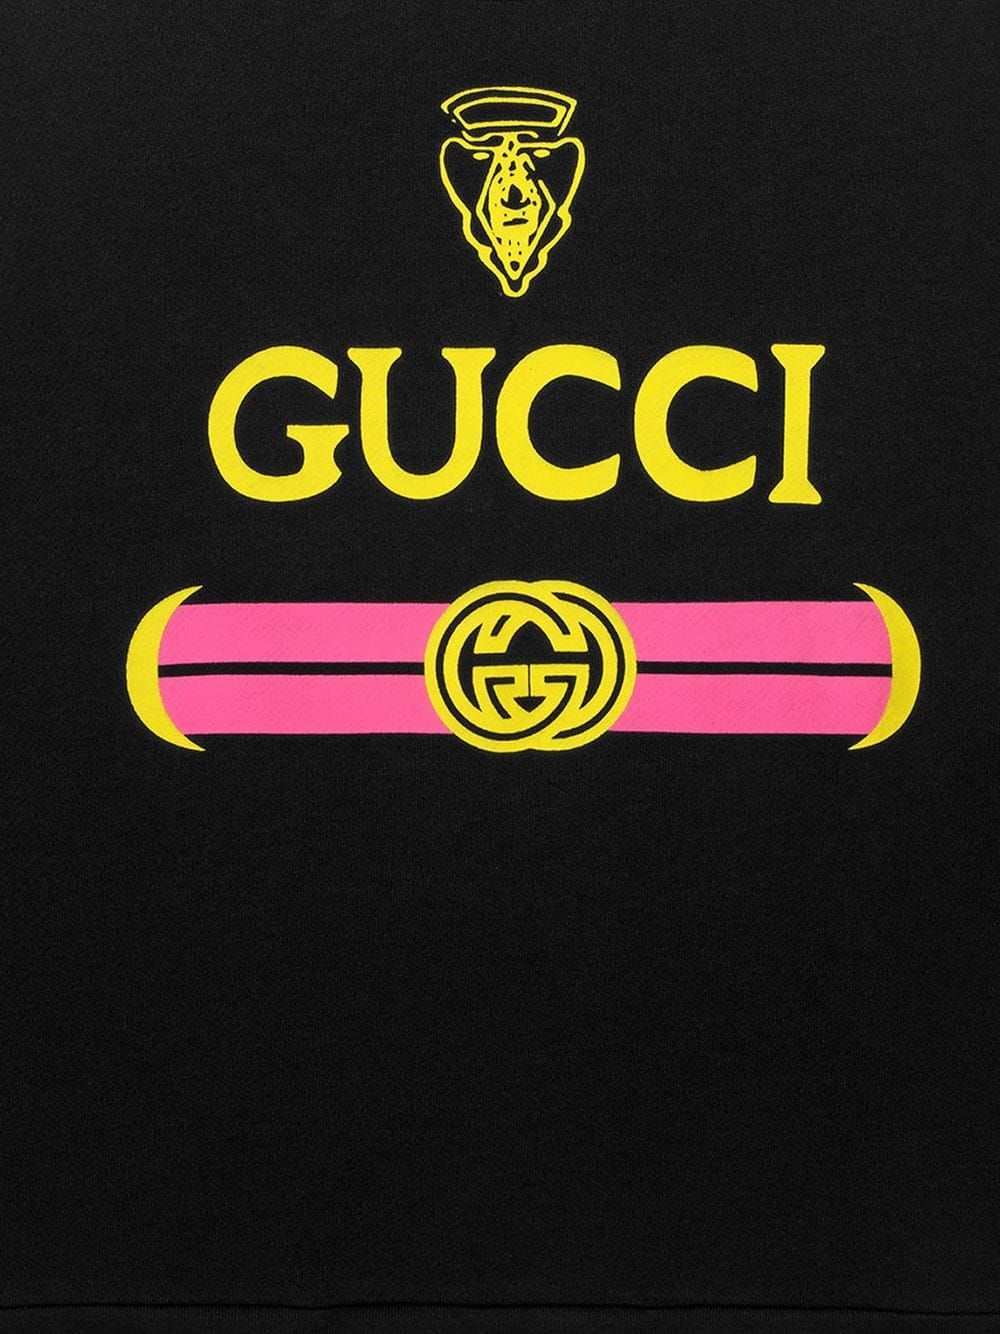 Gucci Cotton sweatshirt with Gucci logo. Chanel wallpaper, Cotton sweatshirts, Gucci